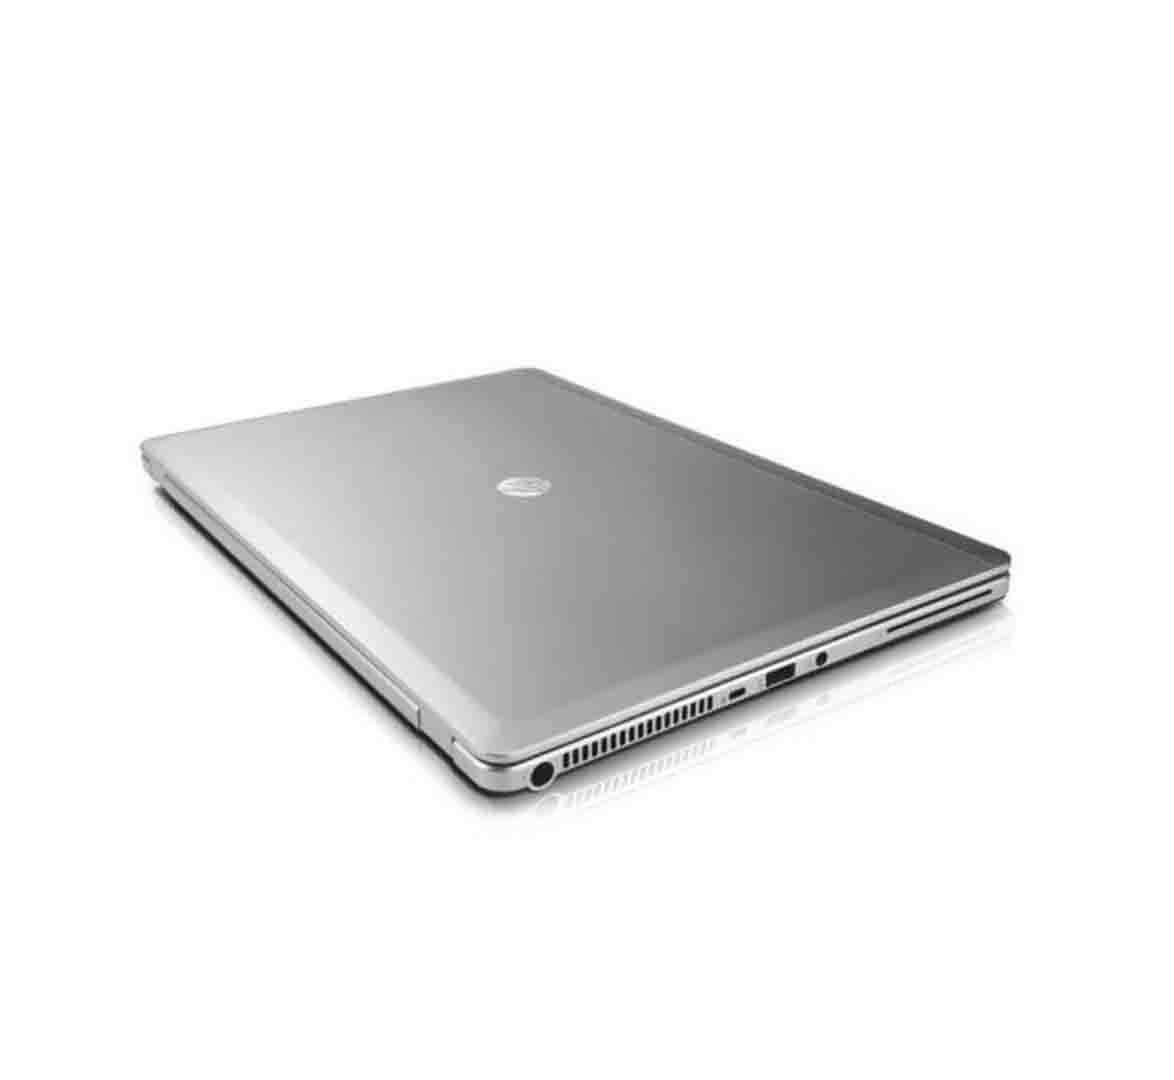 HP Elitebook Folio 9480M Business Laptop, Intel Core i5-4th Gen. CPU, 8GB RAM, 500GB HDD, 14 inch Display, Windows 10